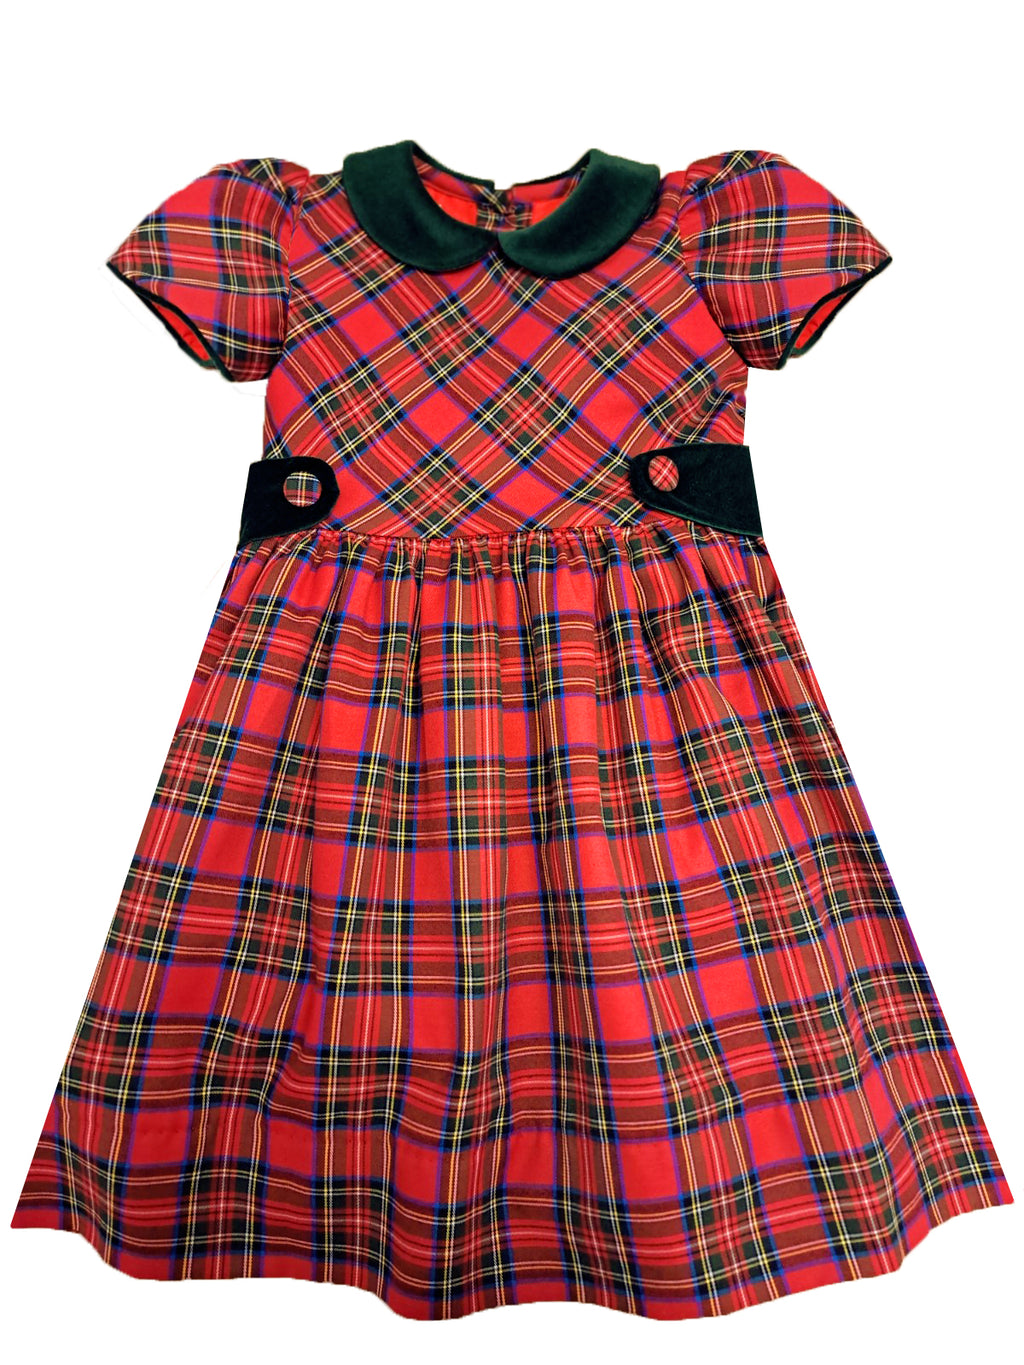 Girl's "Christmas Plaids" Classic Dress - Little Threads Inc. Children's Clothing